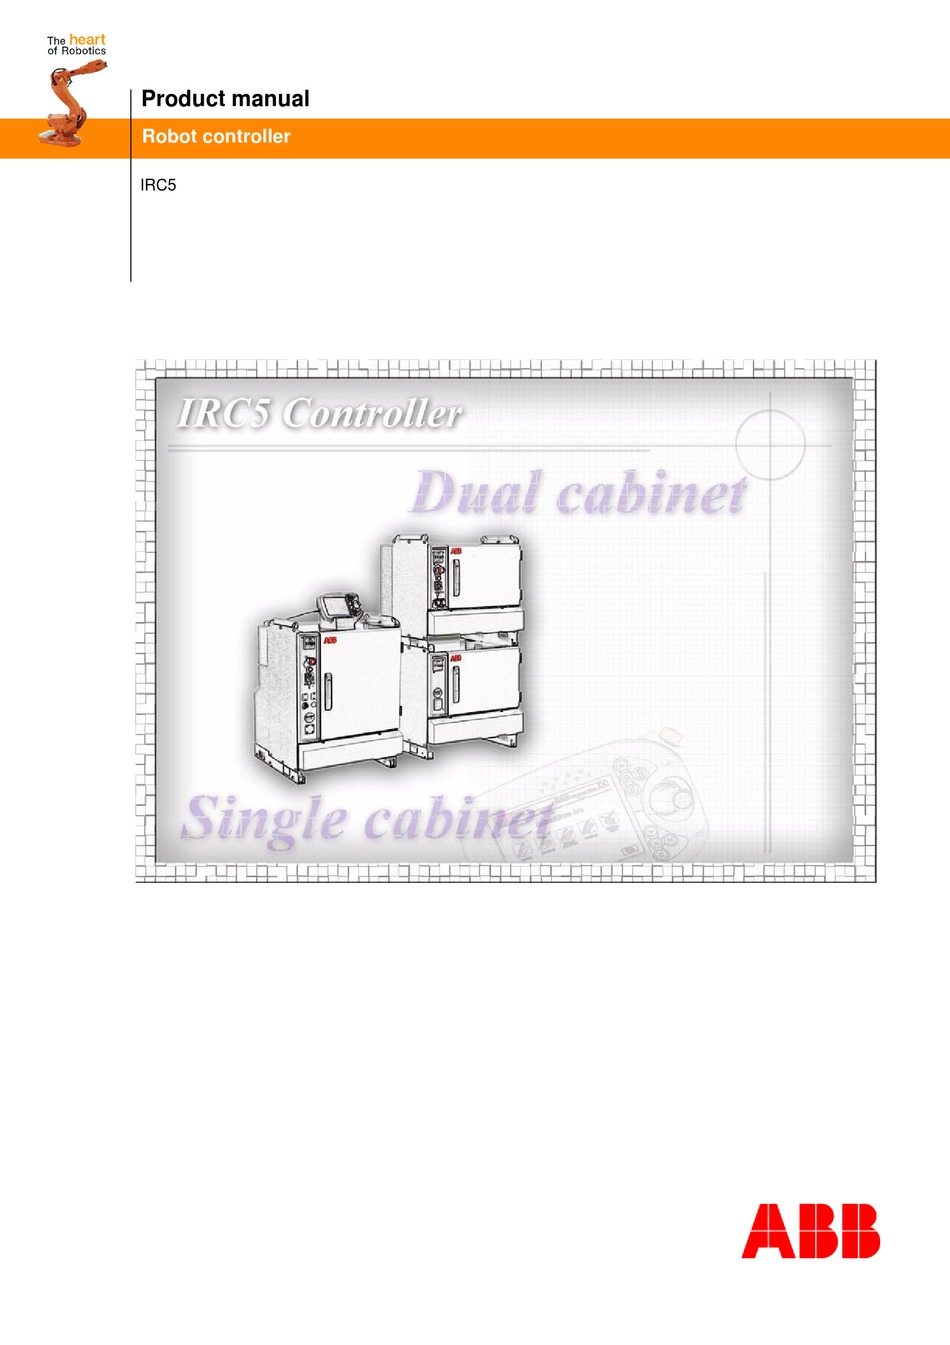 ABB IRC5 PRODUCT MANUAL Pdf Download | ManualsLib  Abb Irc5 M2004 Wiring Diagram    ManualsLib